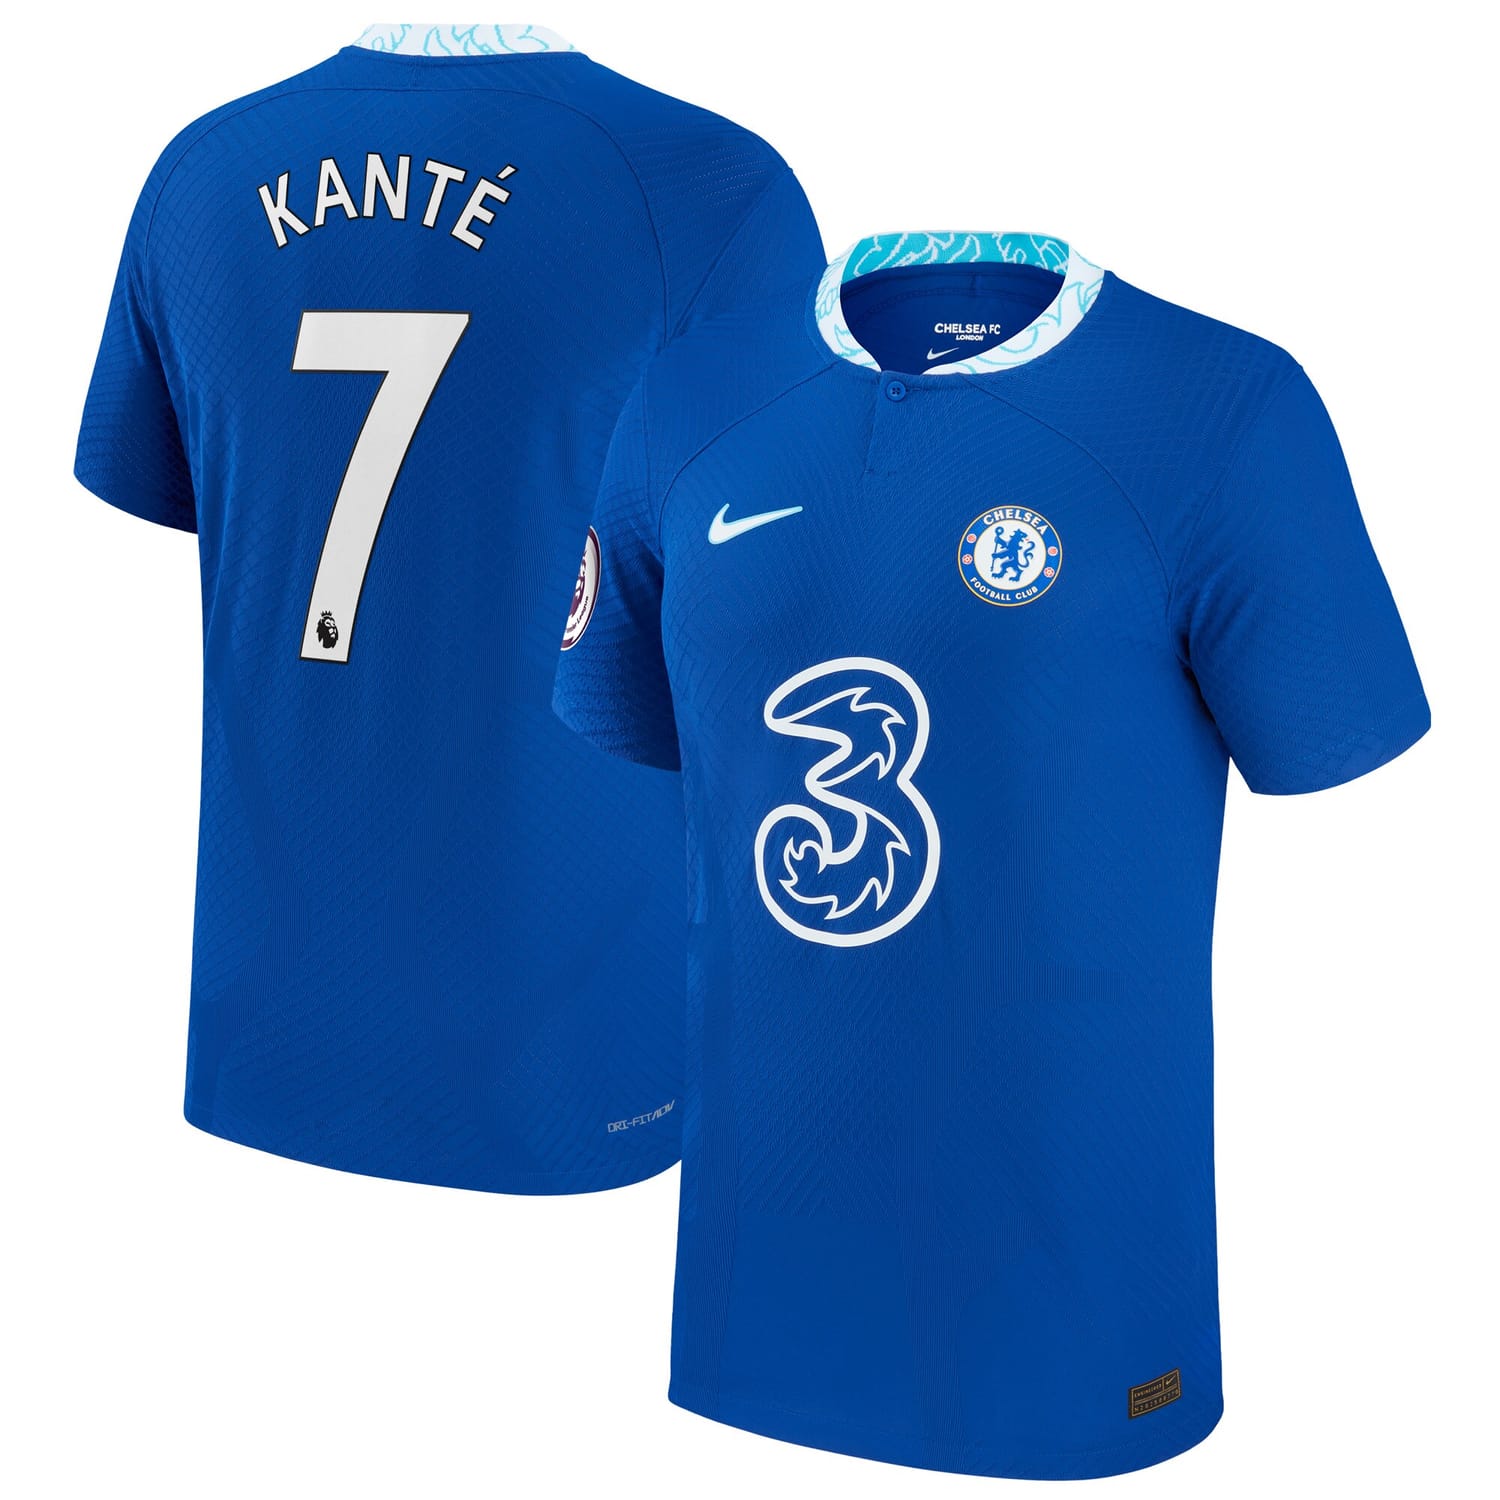 Premier League Chelsea Home Authentic Jersey Shirt Blue 2022-23 player N'Golo Kante printing for Men